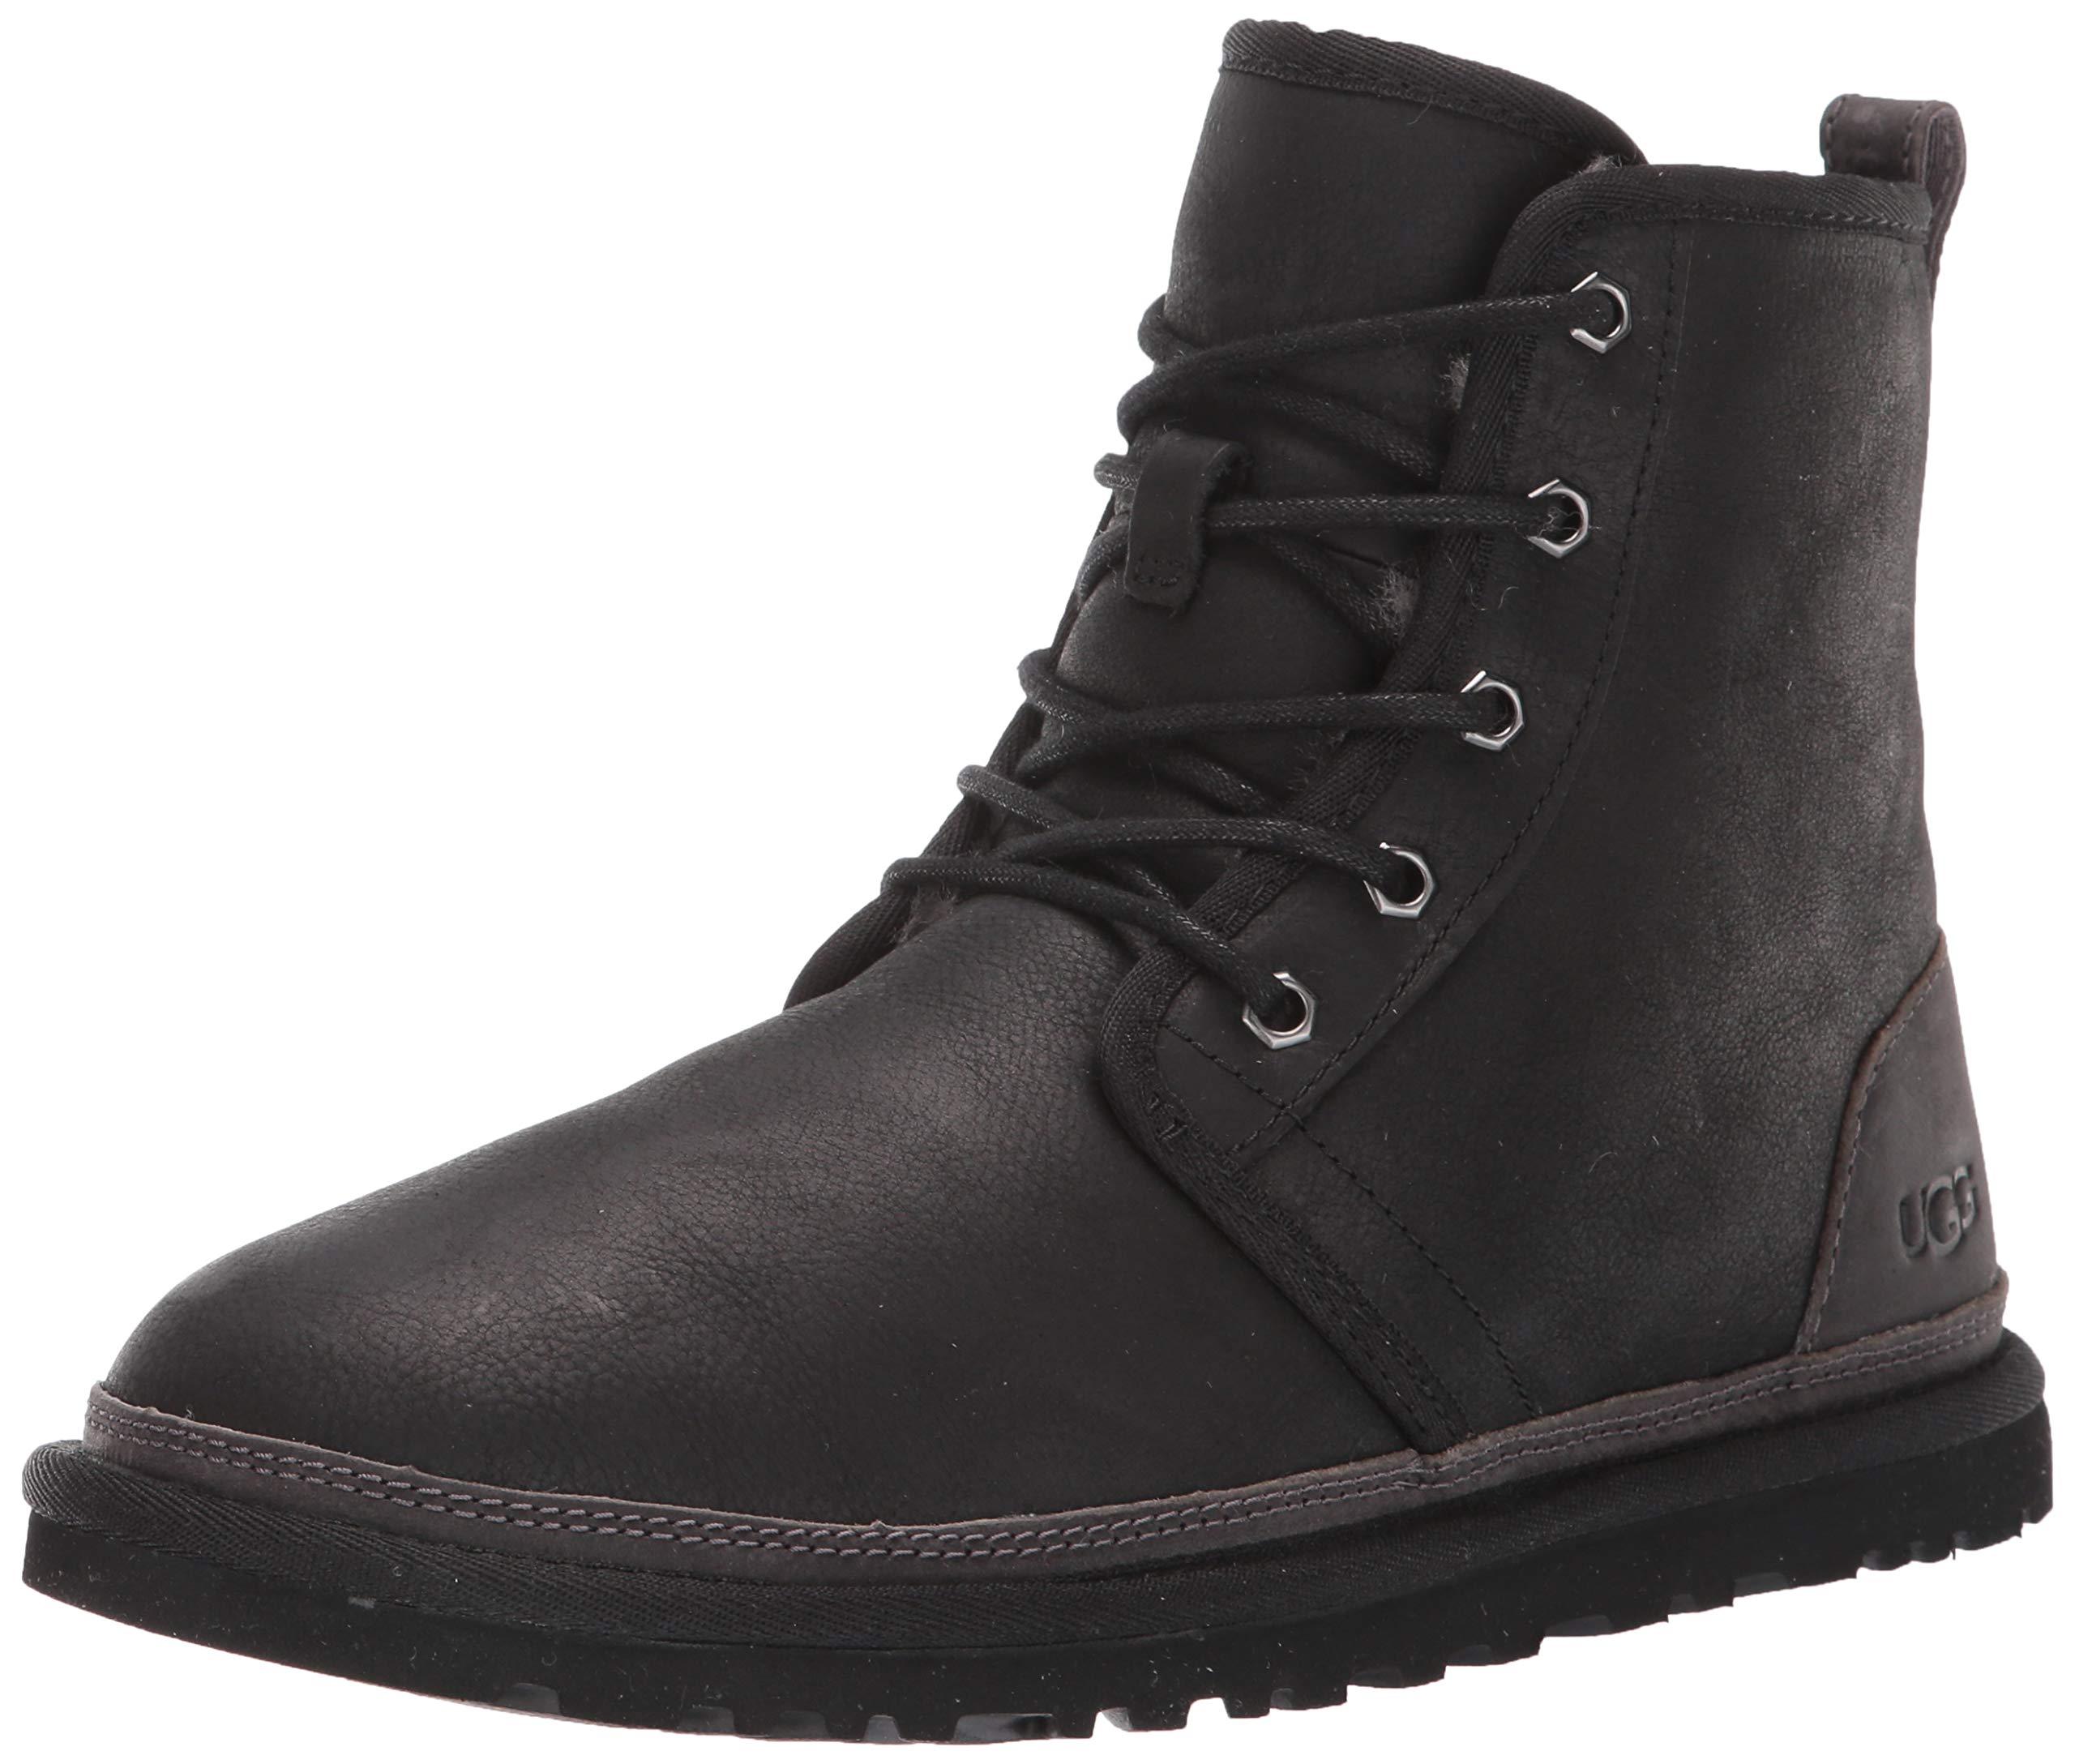 UGG Harkley Leather Chukka Boot in Black for Men - Lyst